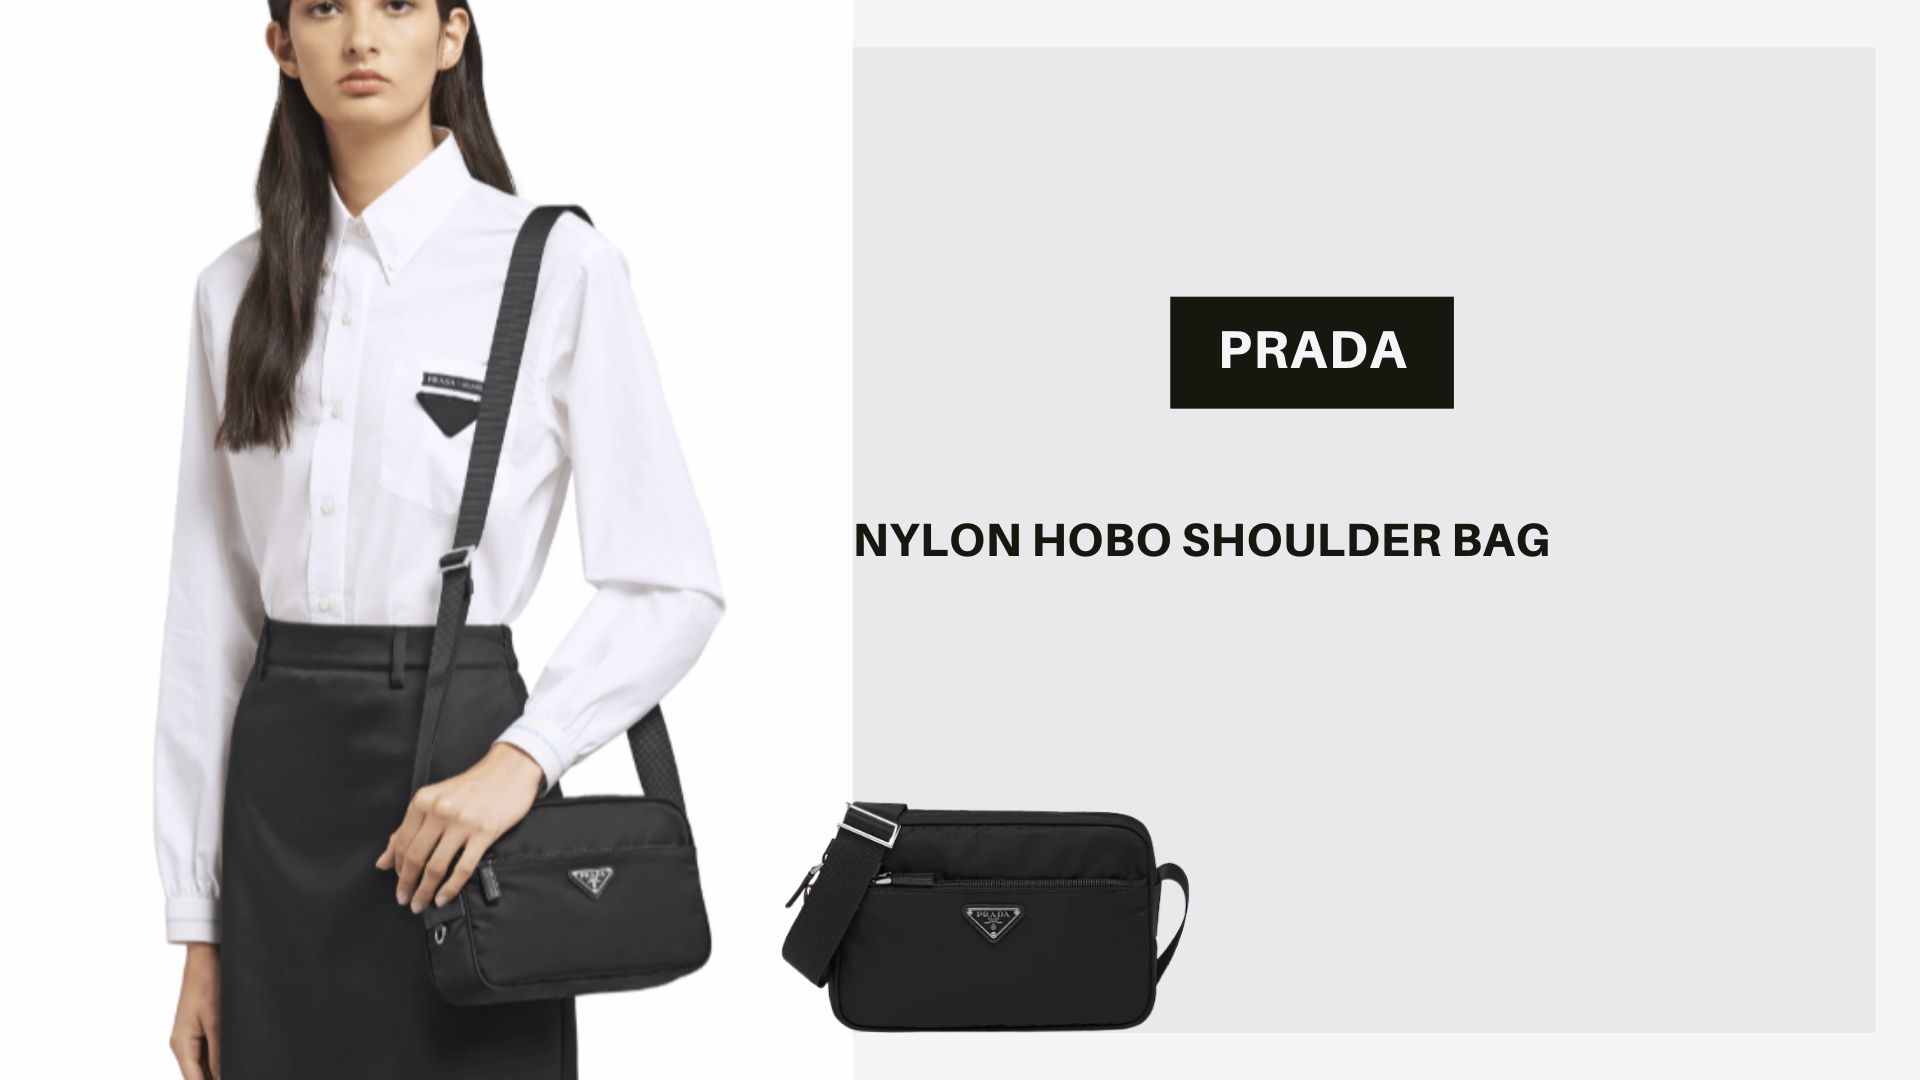 Nylon hobo shoulder bag